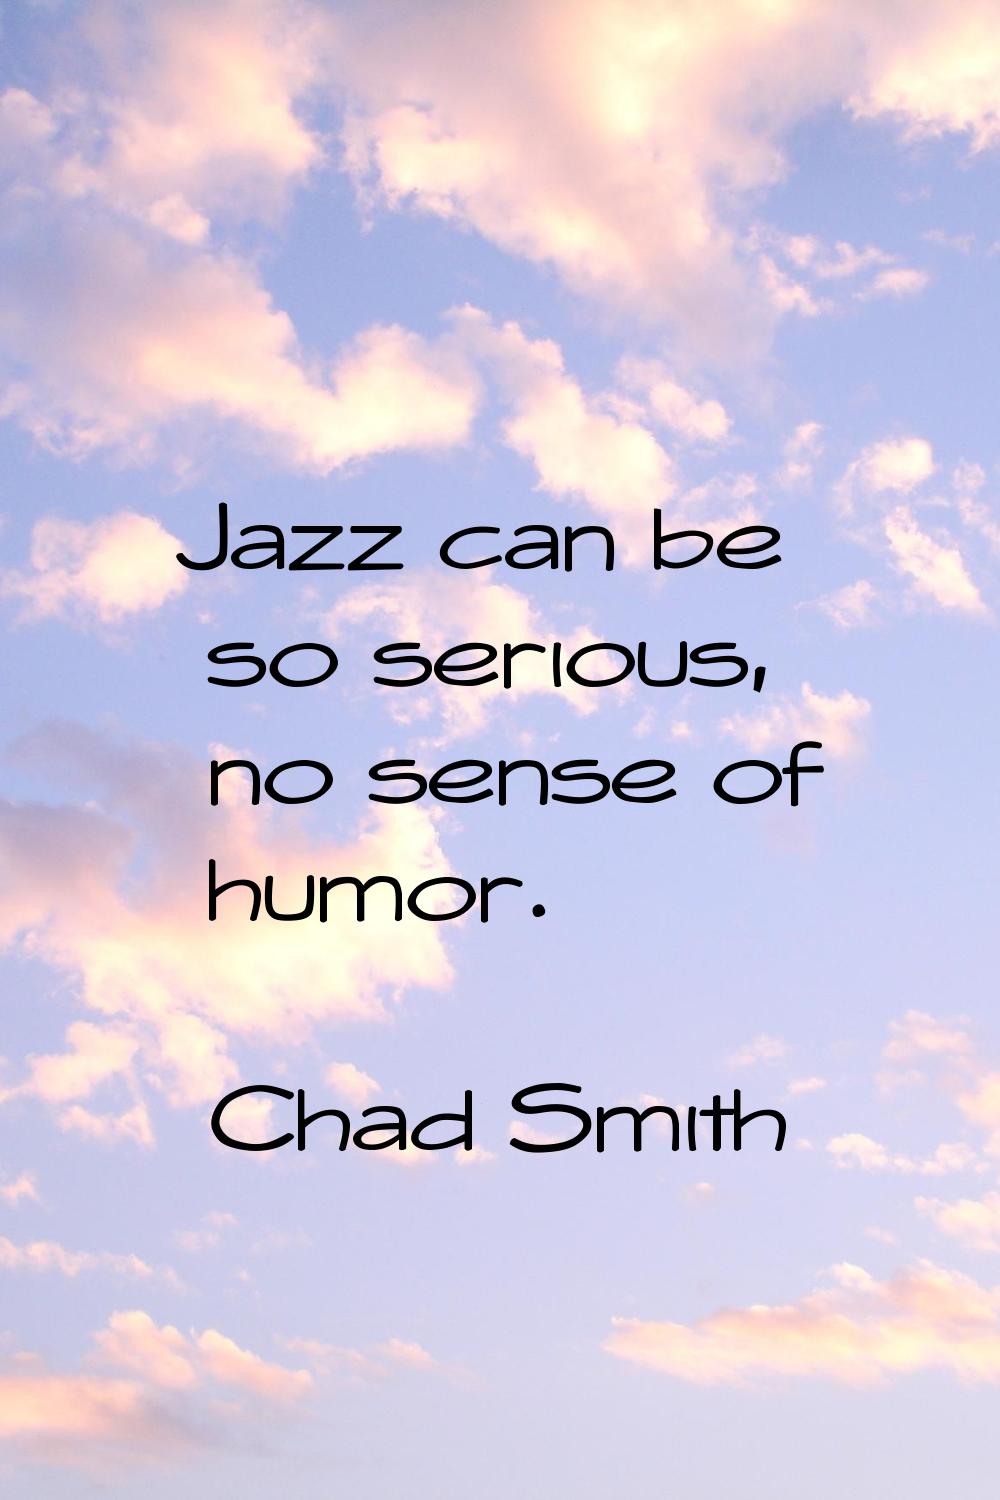 Jazz can be so serious, no sense of humor.